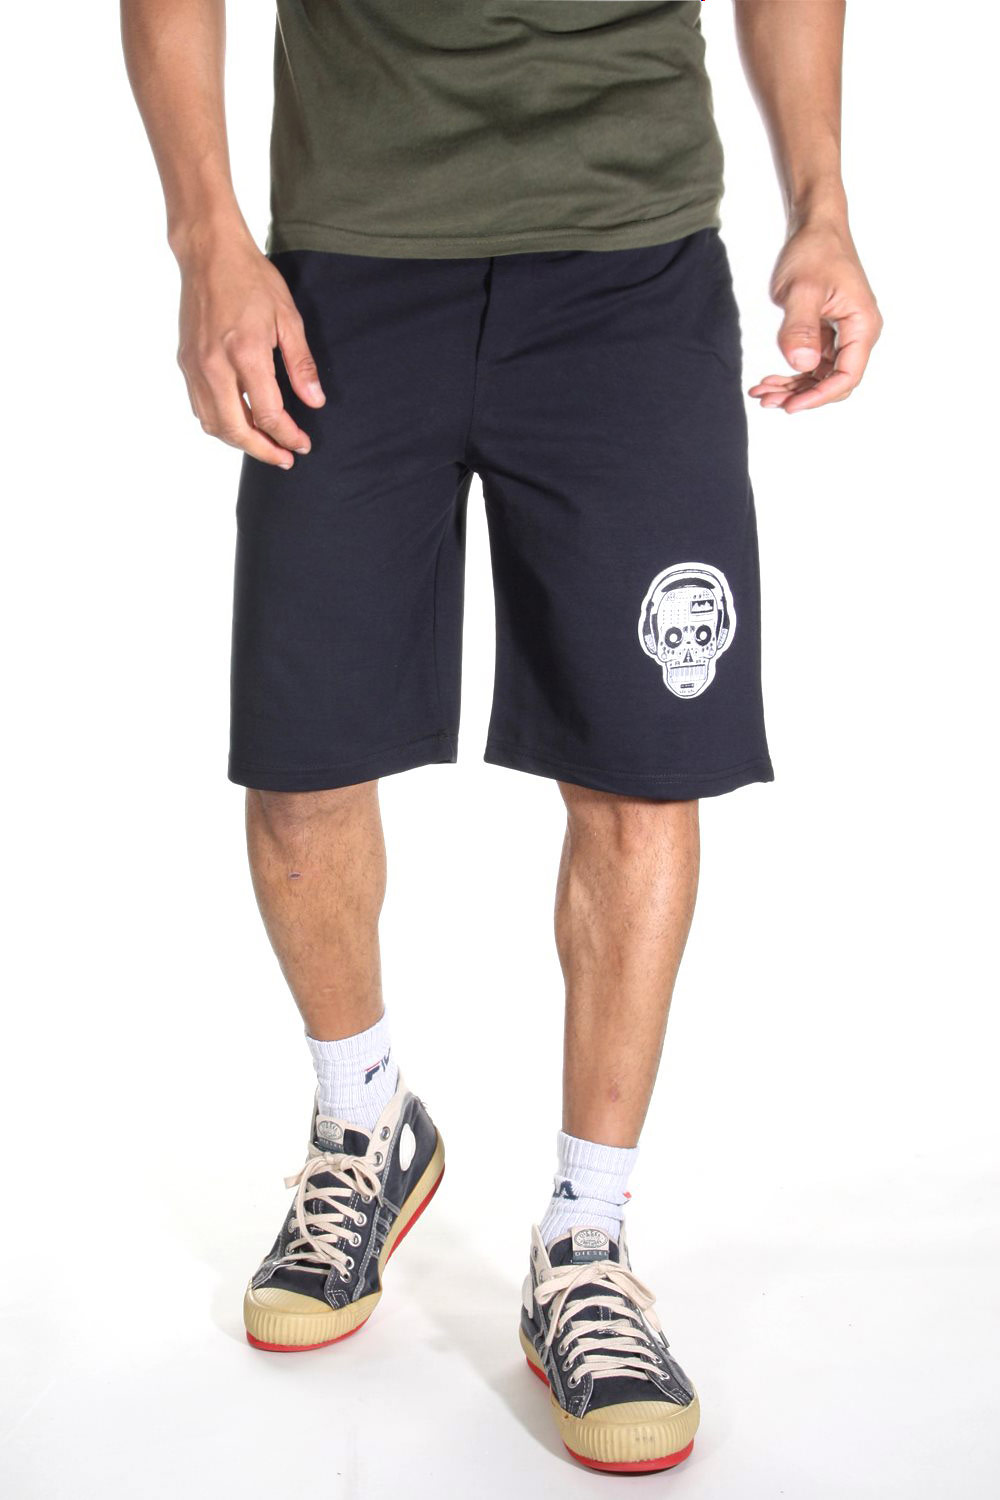 FIYASKO shorts at oboy.com